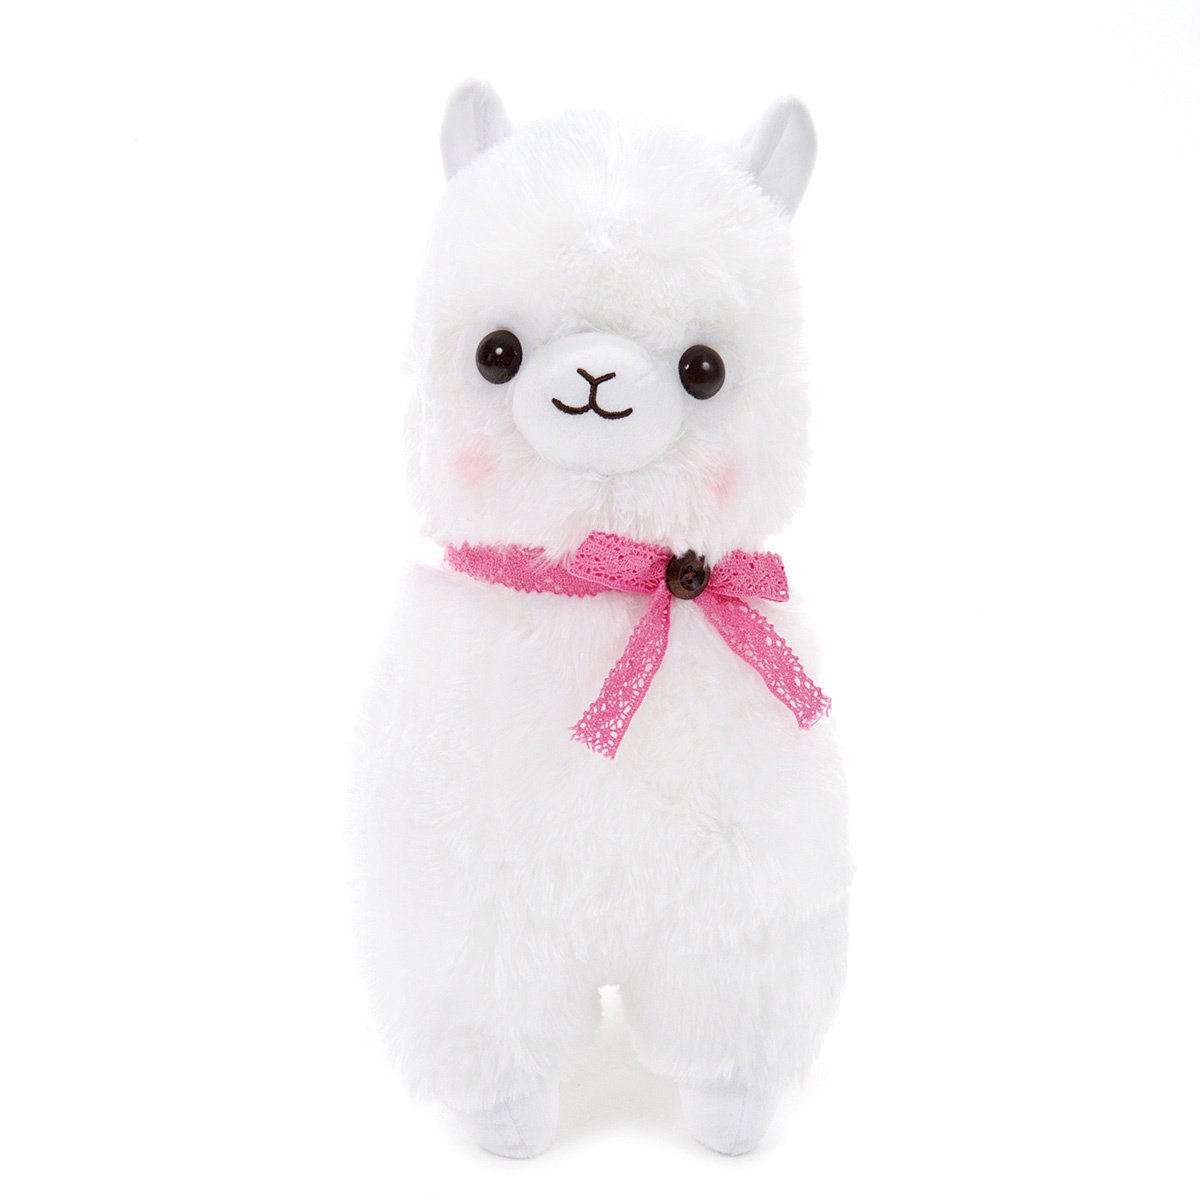 Plush Alpaca, Amuse, Alpacasso, Shiro-chan, White, 15 Inches BIG Size